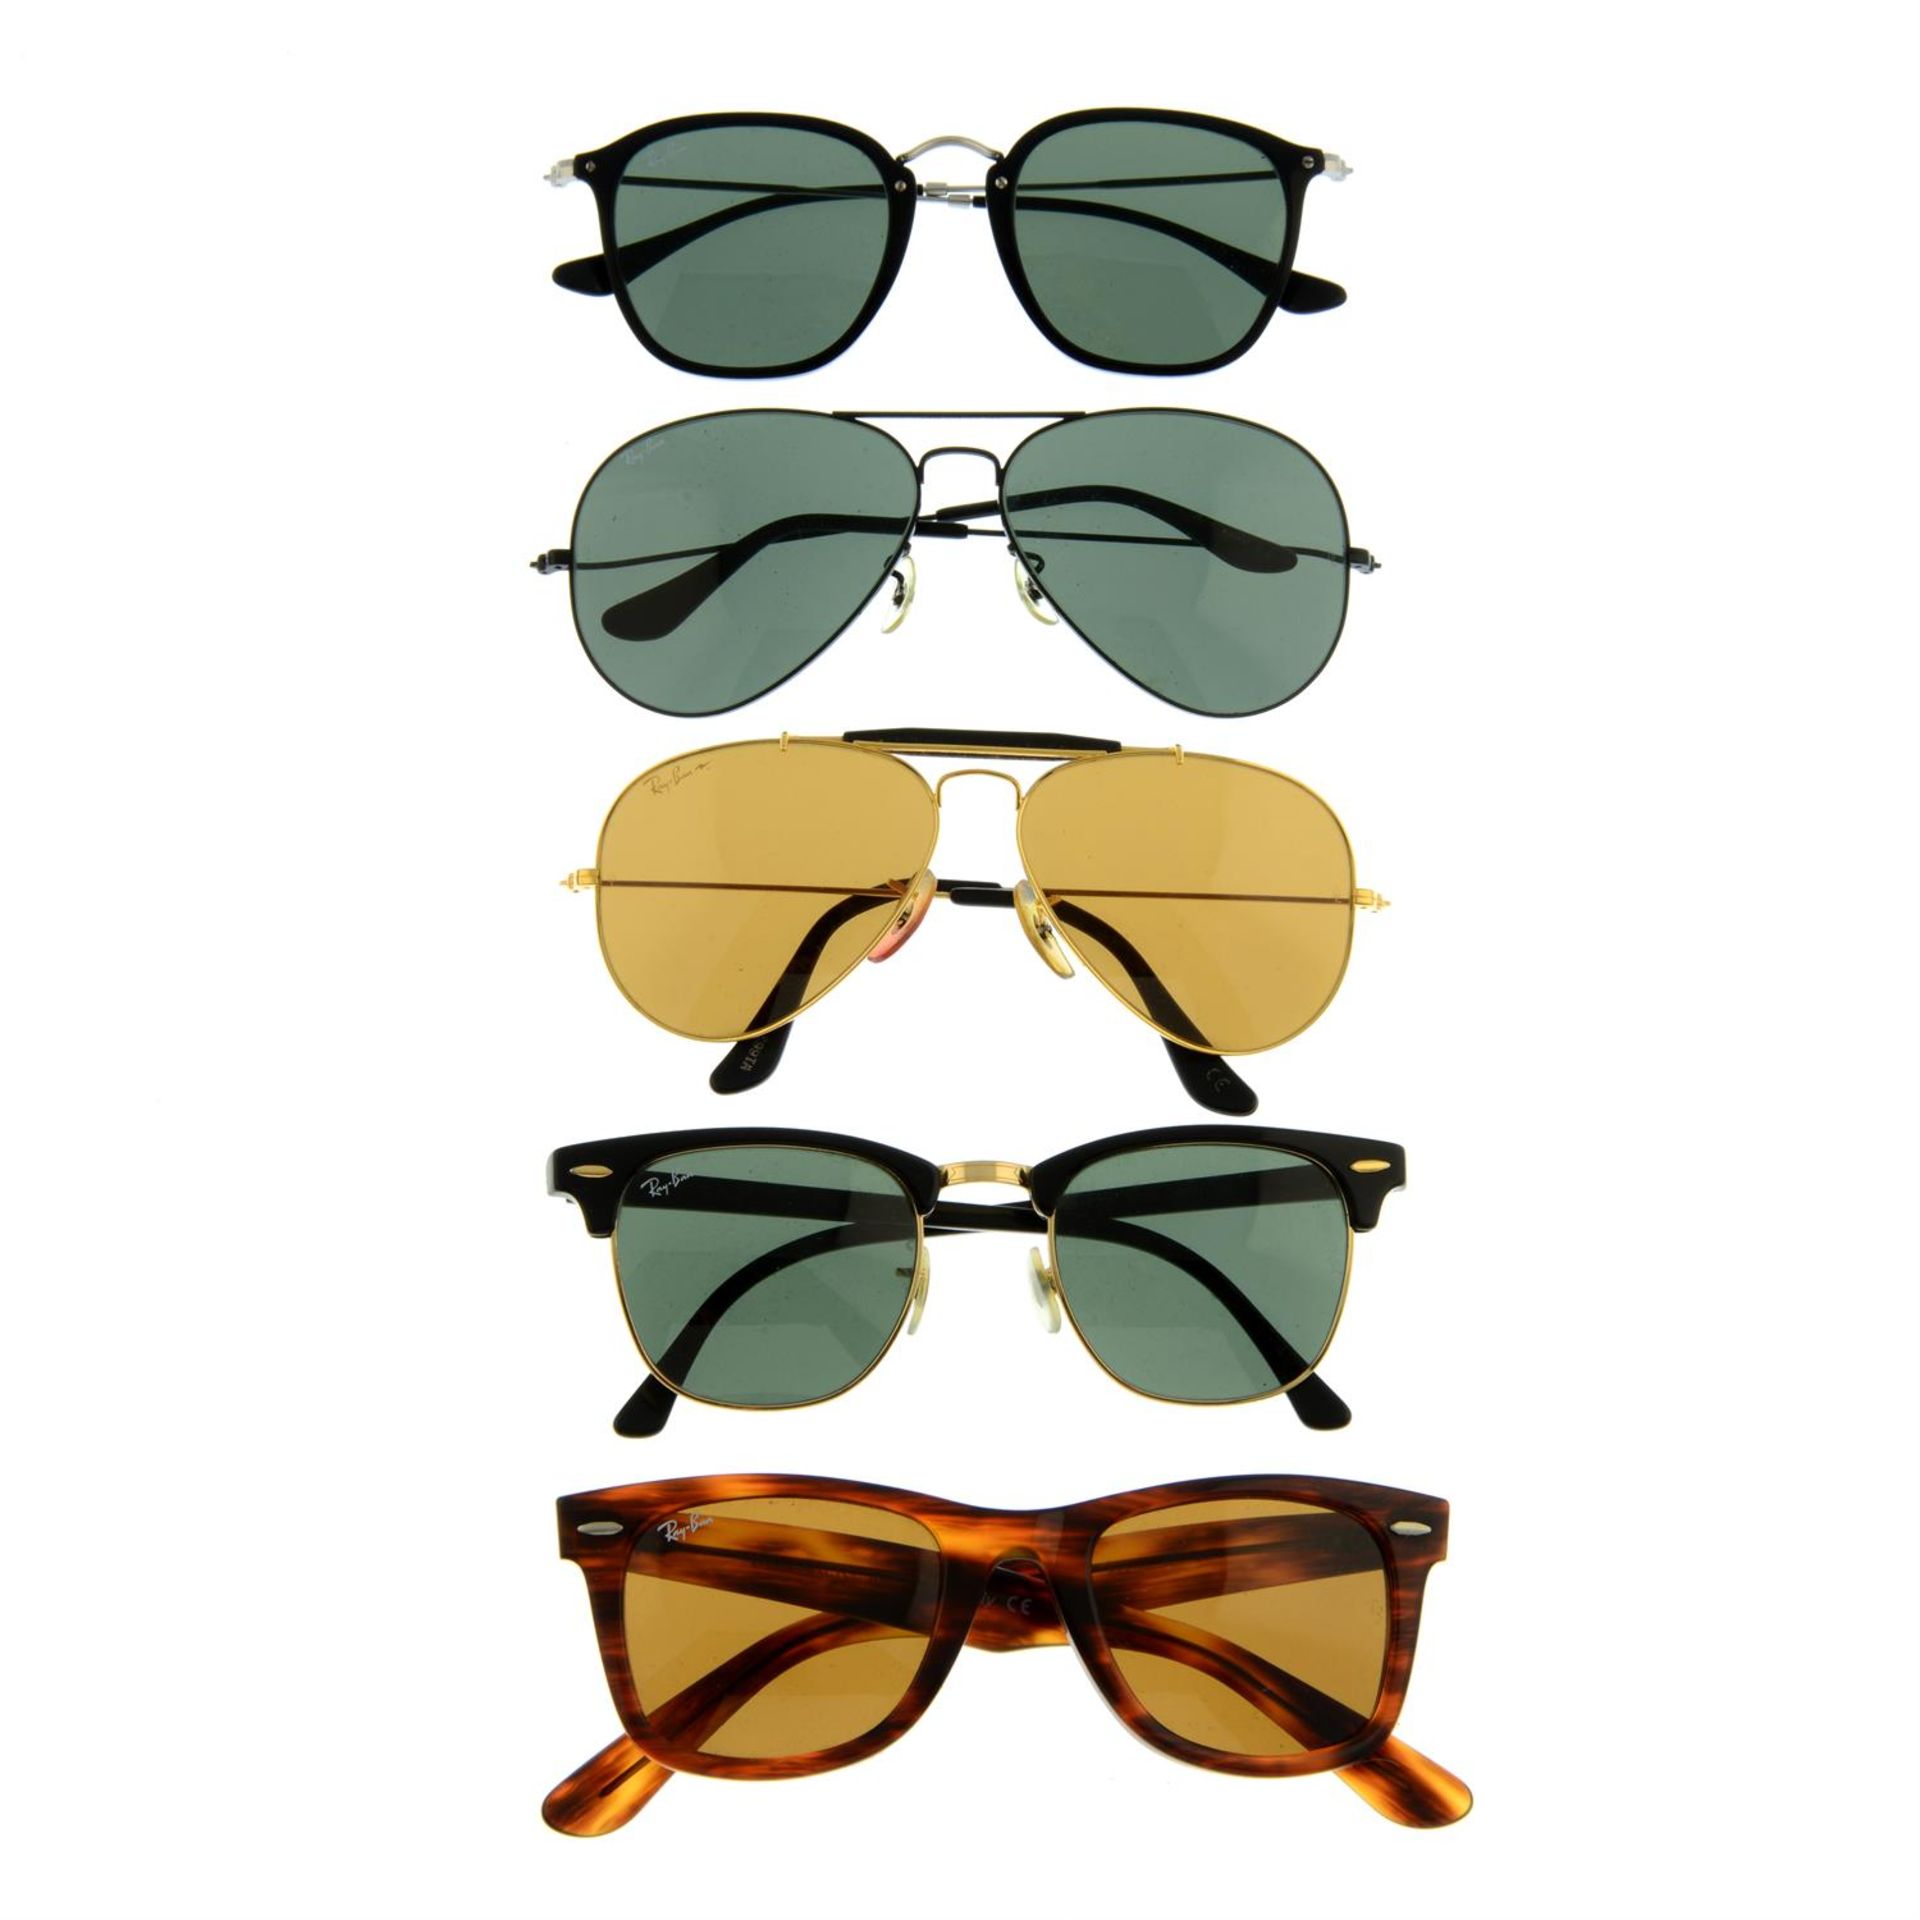 RAY BAN - five pairs of sunglasses.